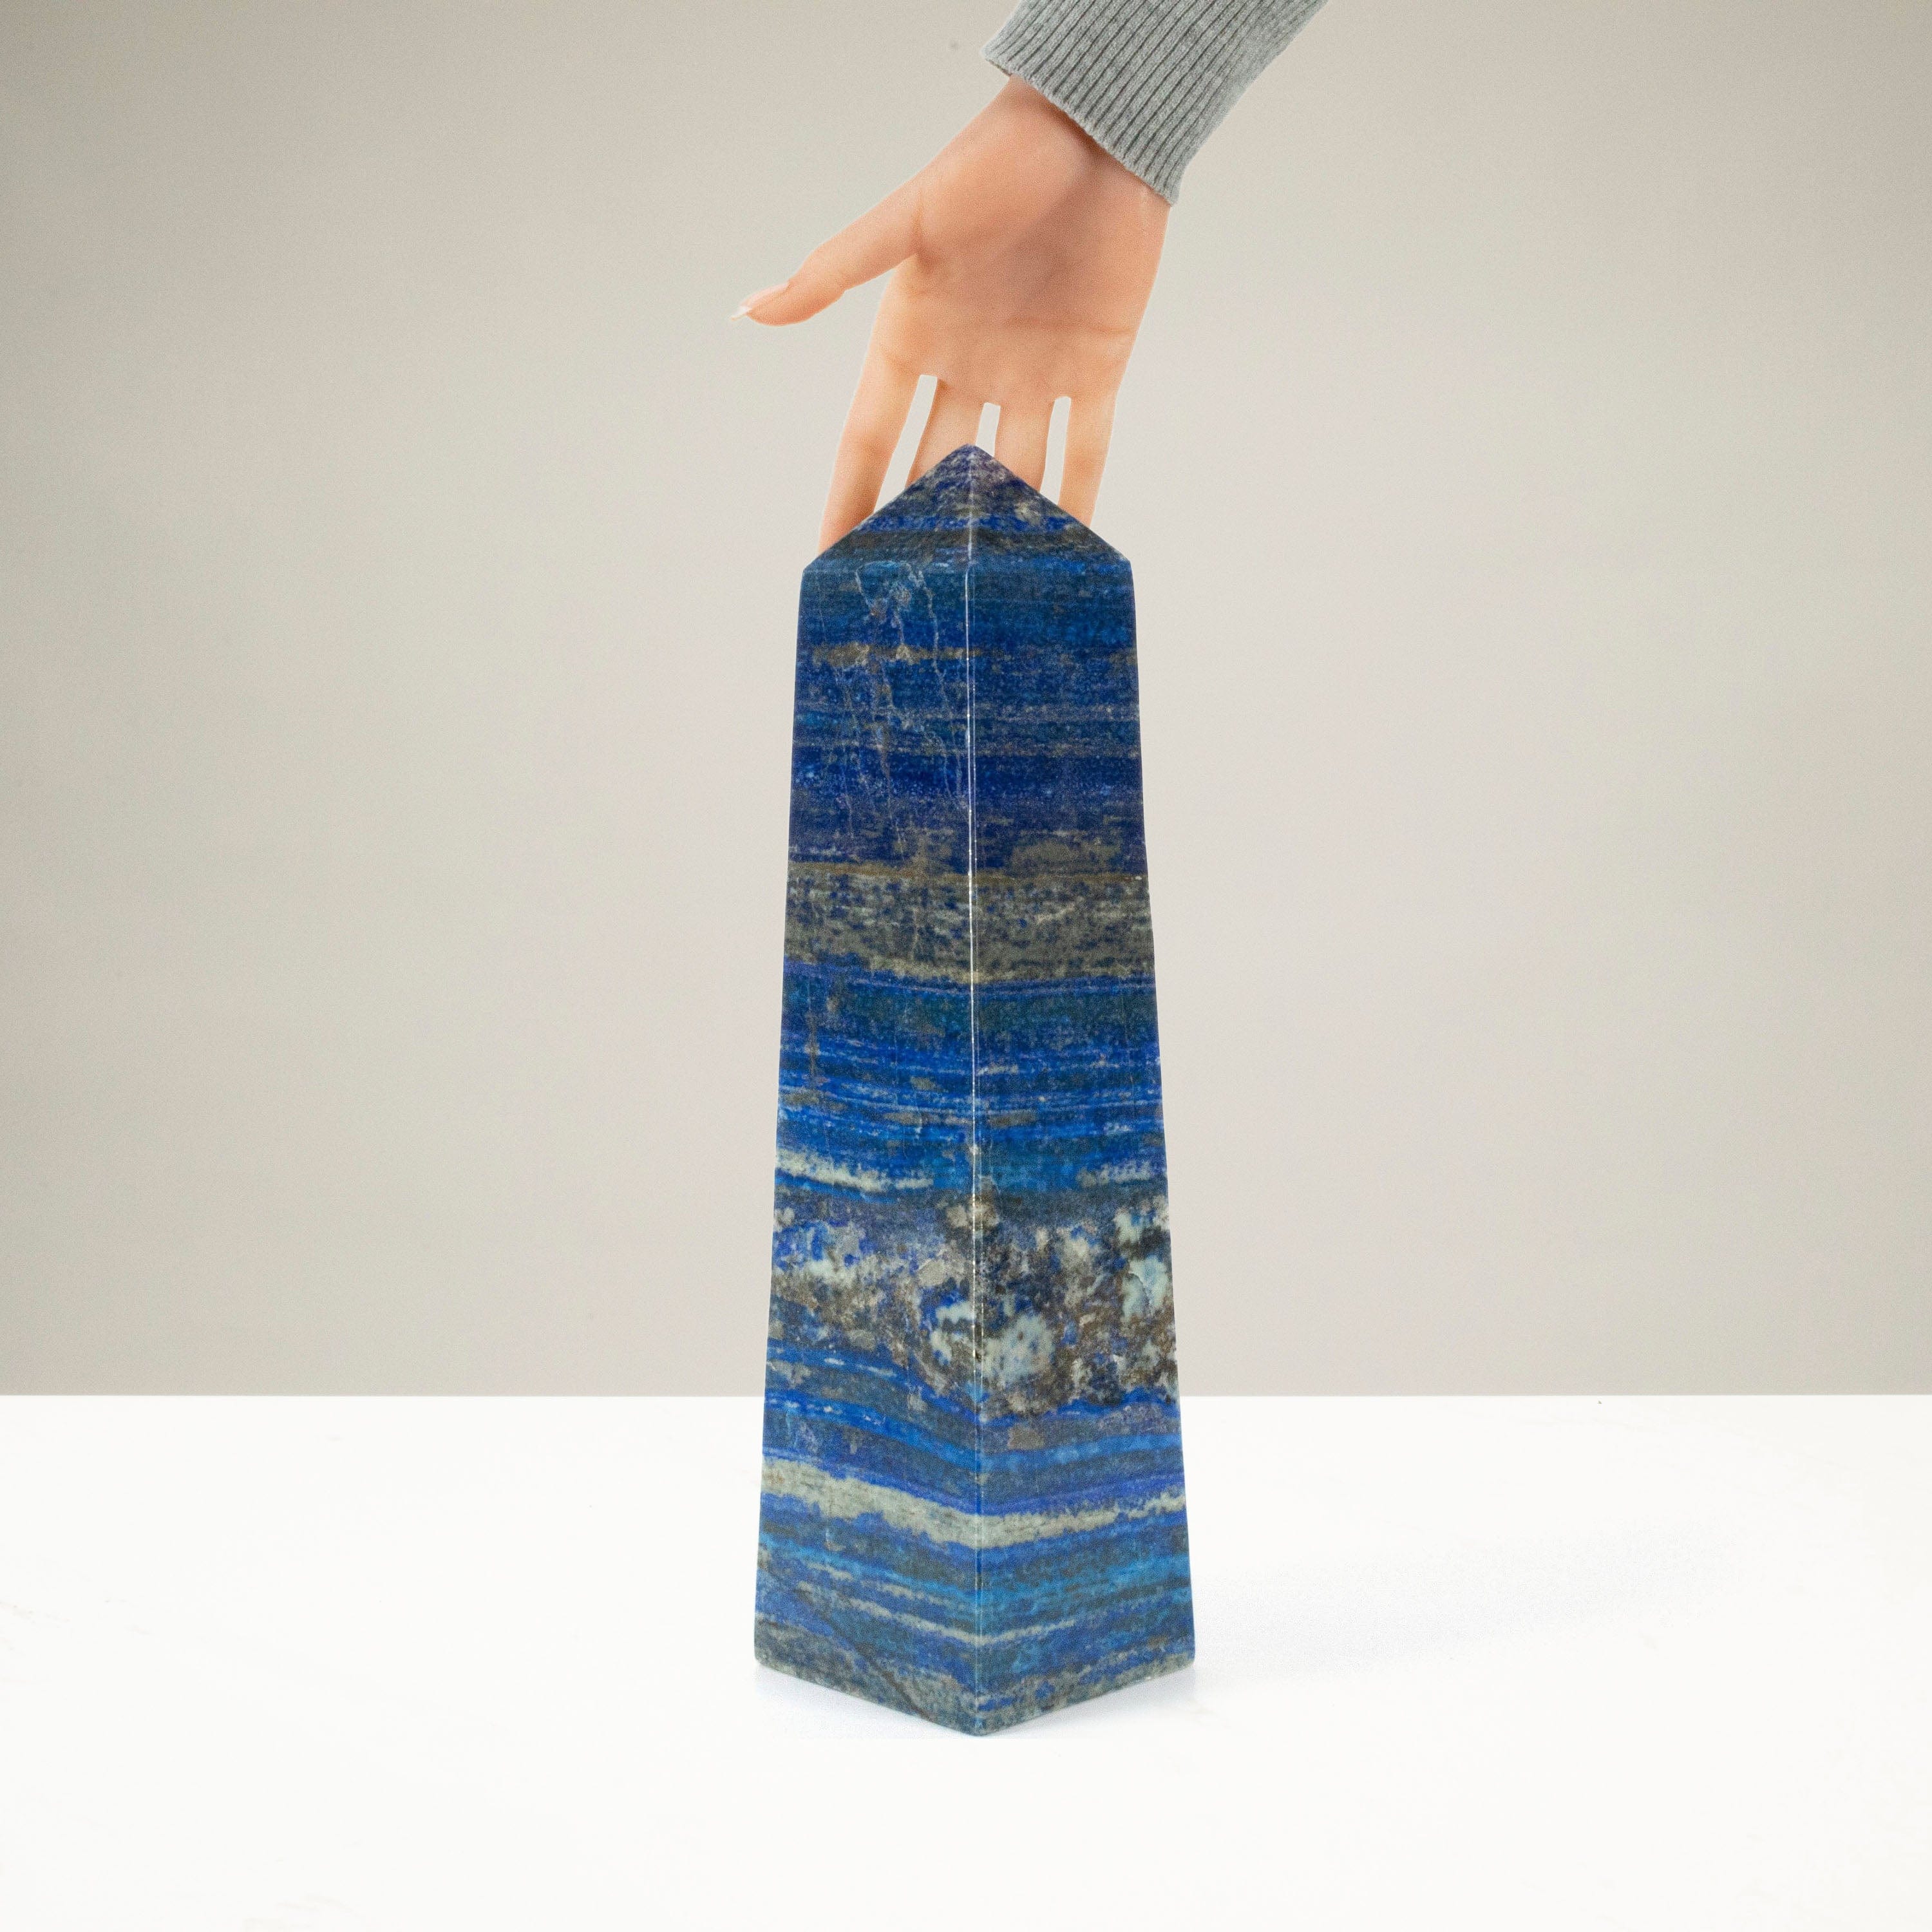 Kalifano Lapis Lapis Lazuli Polished Obelisk from Afghanistan - 14.5" / 15 lbs LPOB13800.001